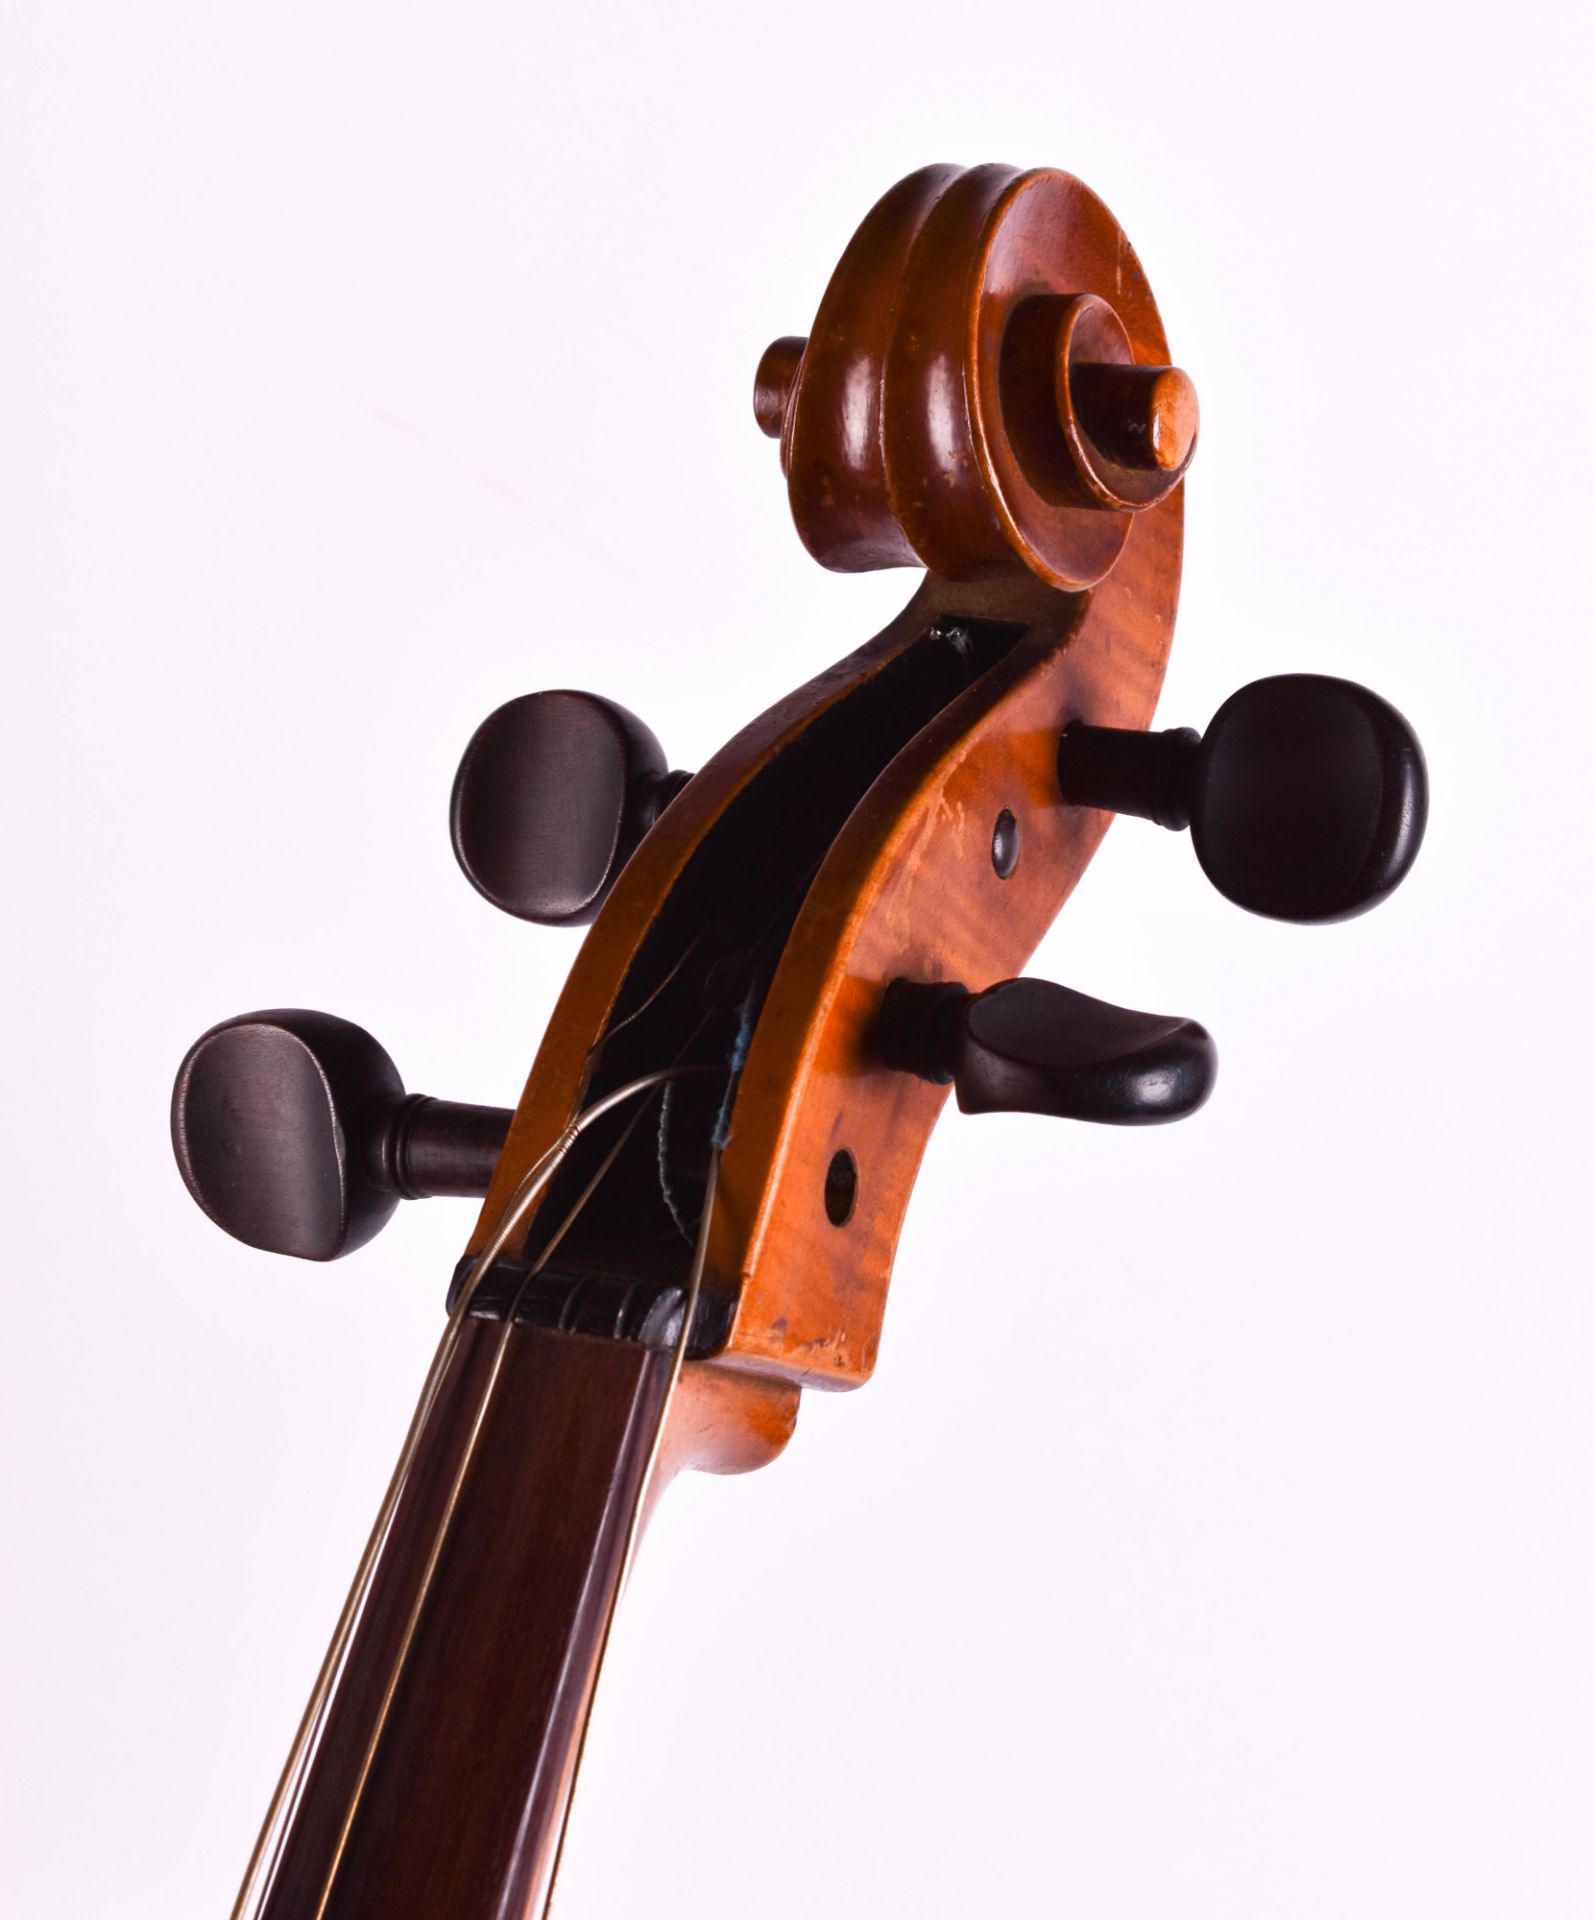 Cello around 1900 - Image 5 of 5